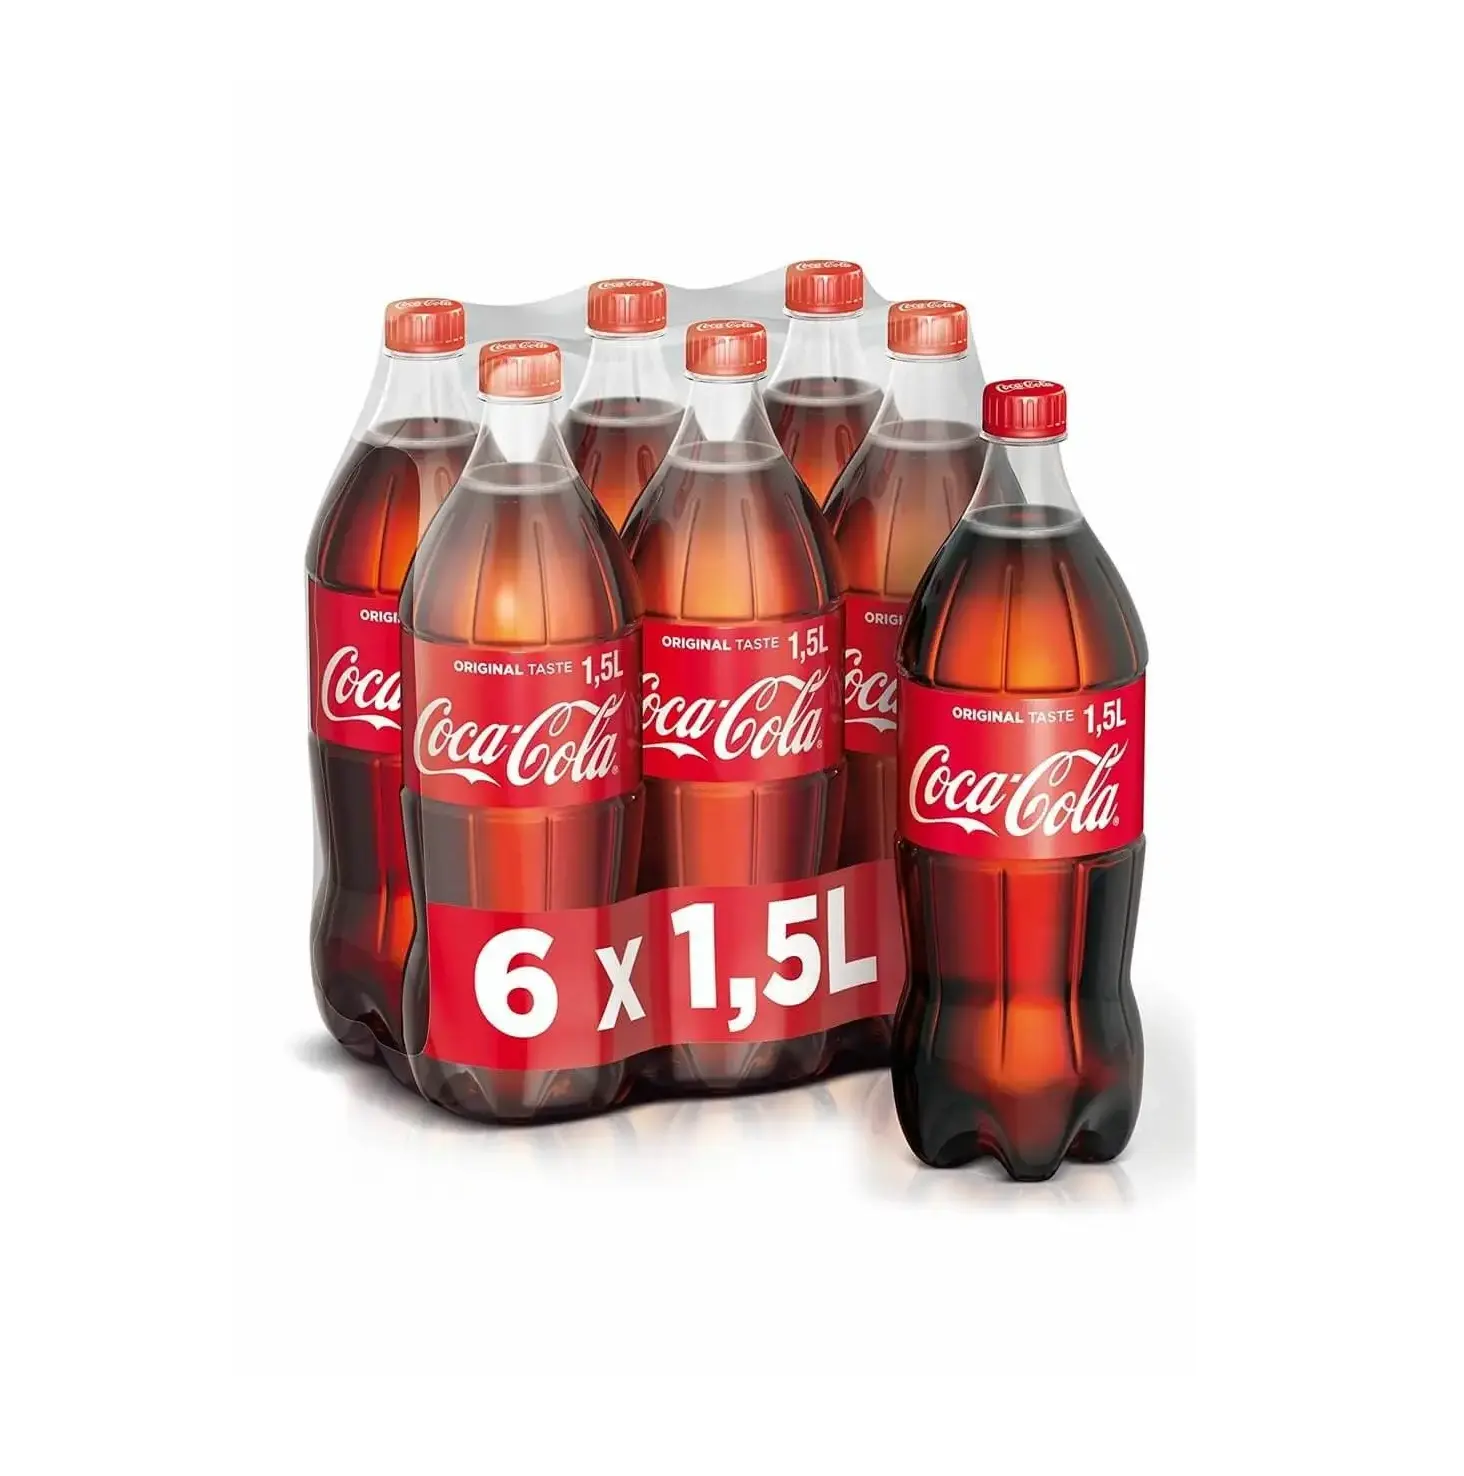 Toptan alkolsüz içecekler Coca Cola 330ml x 24 kutular, Coca-Cola 1.5 litre 500ml